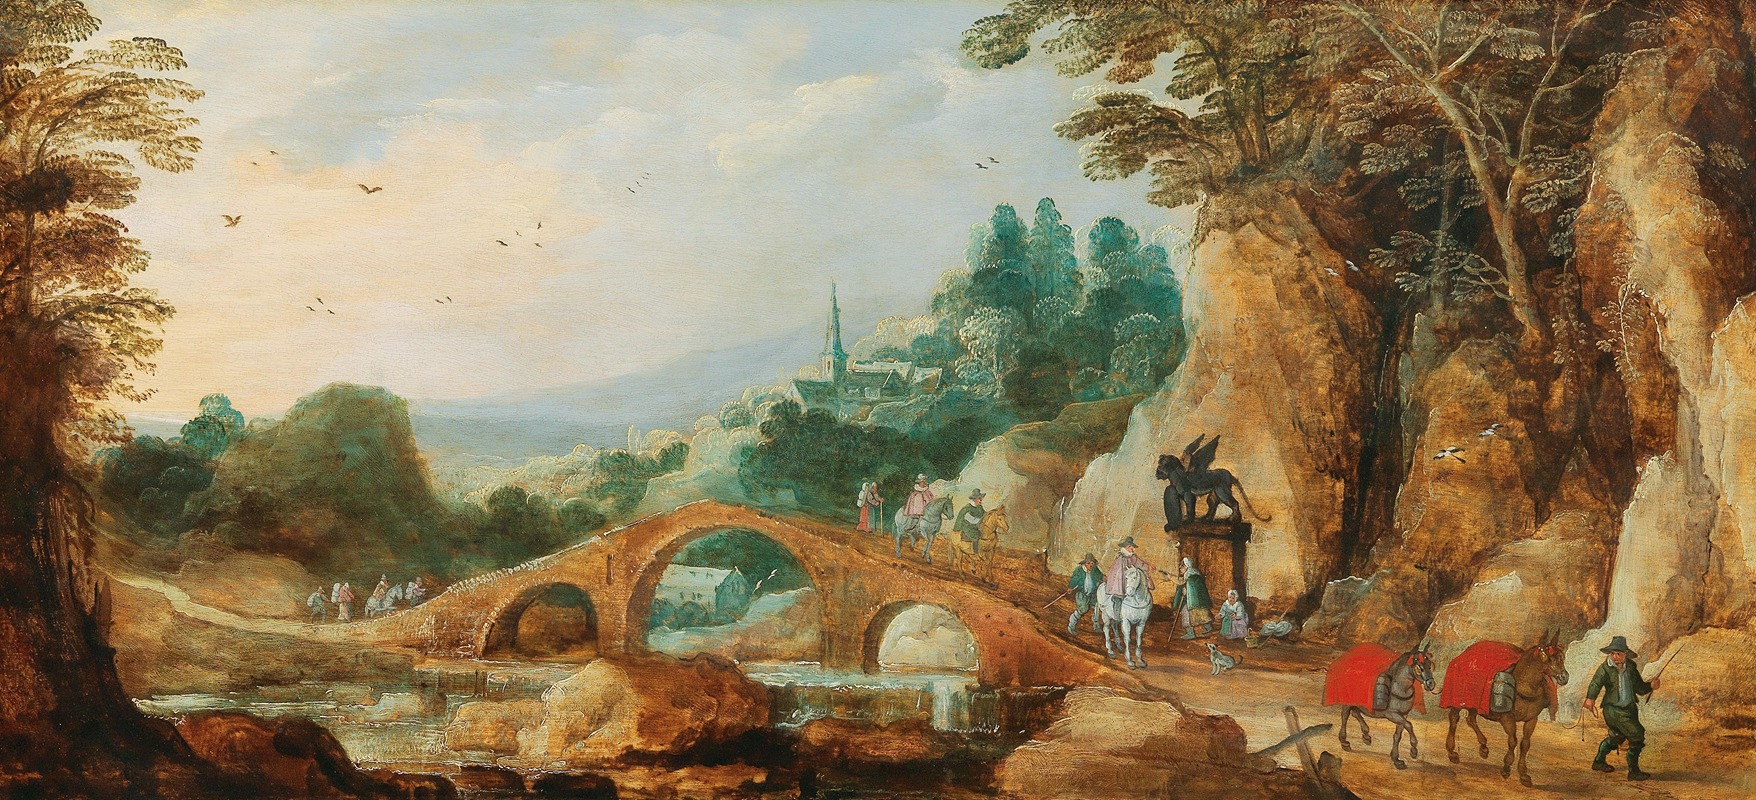 Joos de Momper - A rocky landscape with riders near a bridge